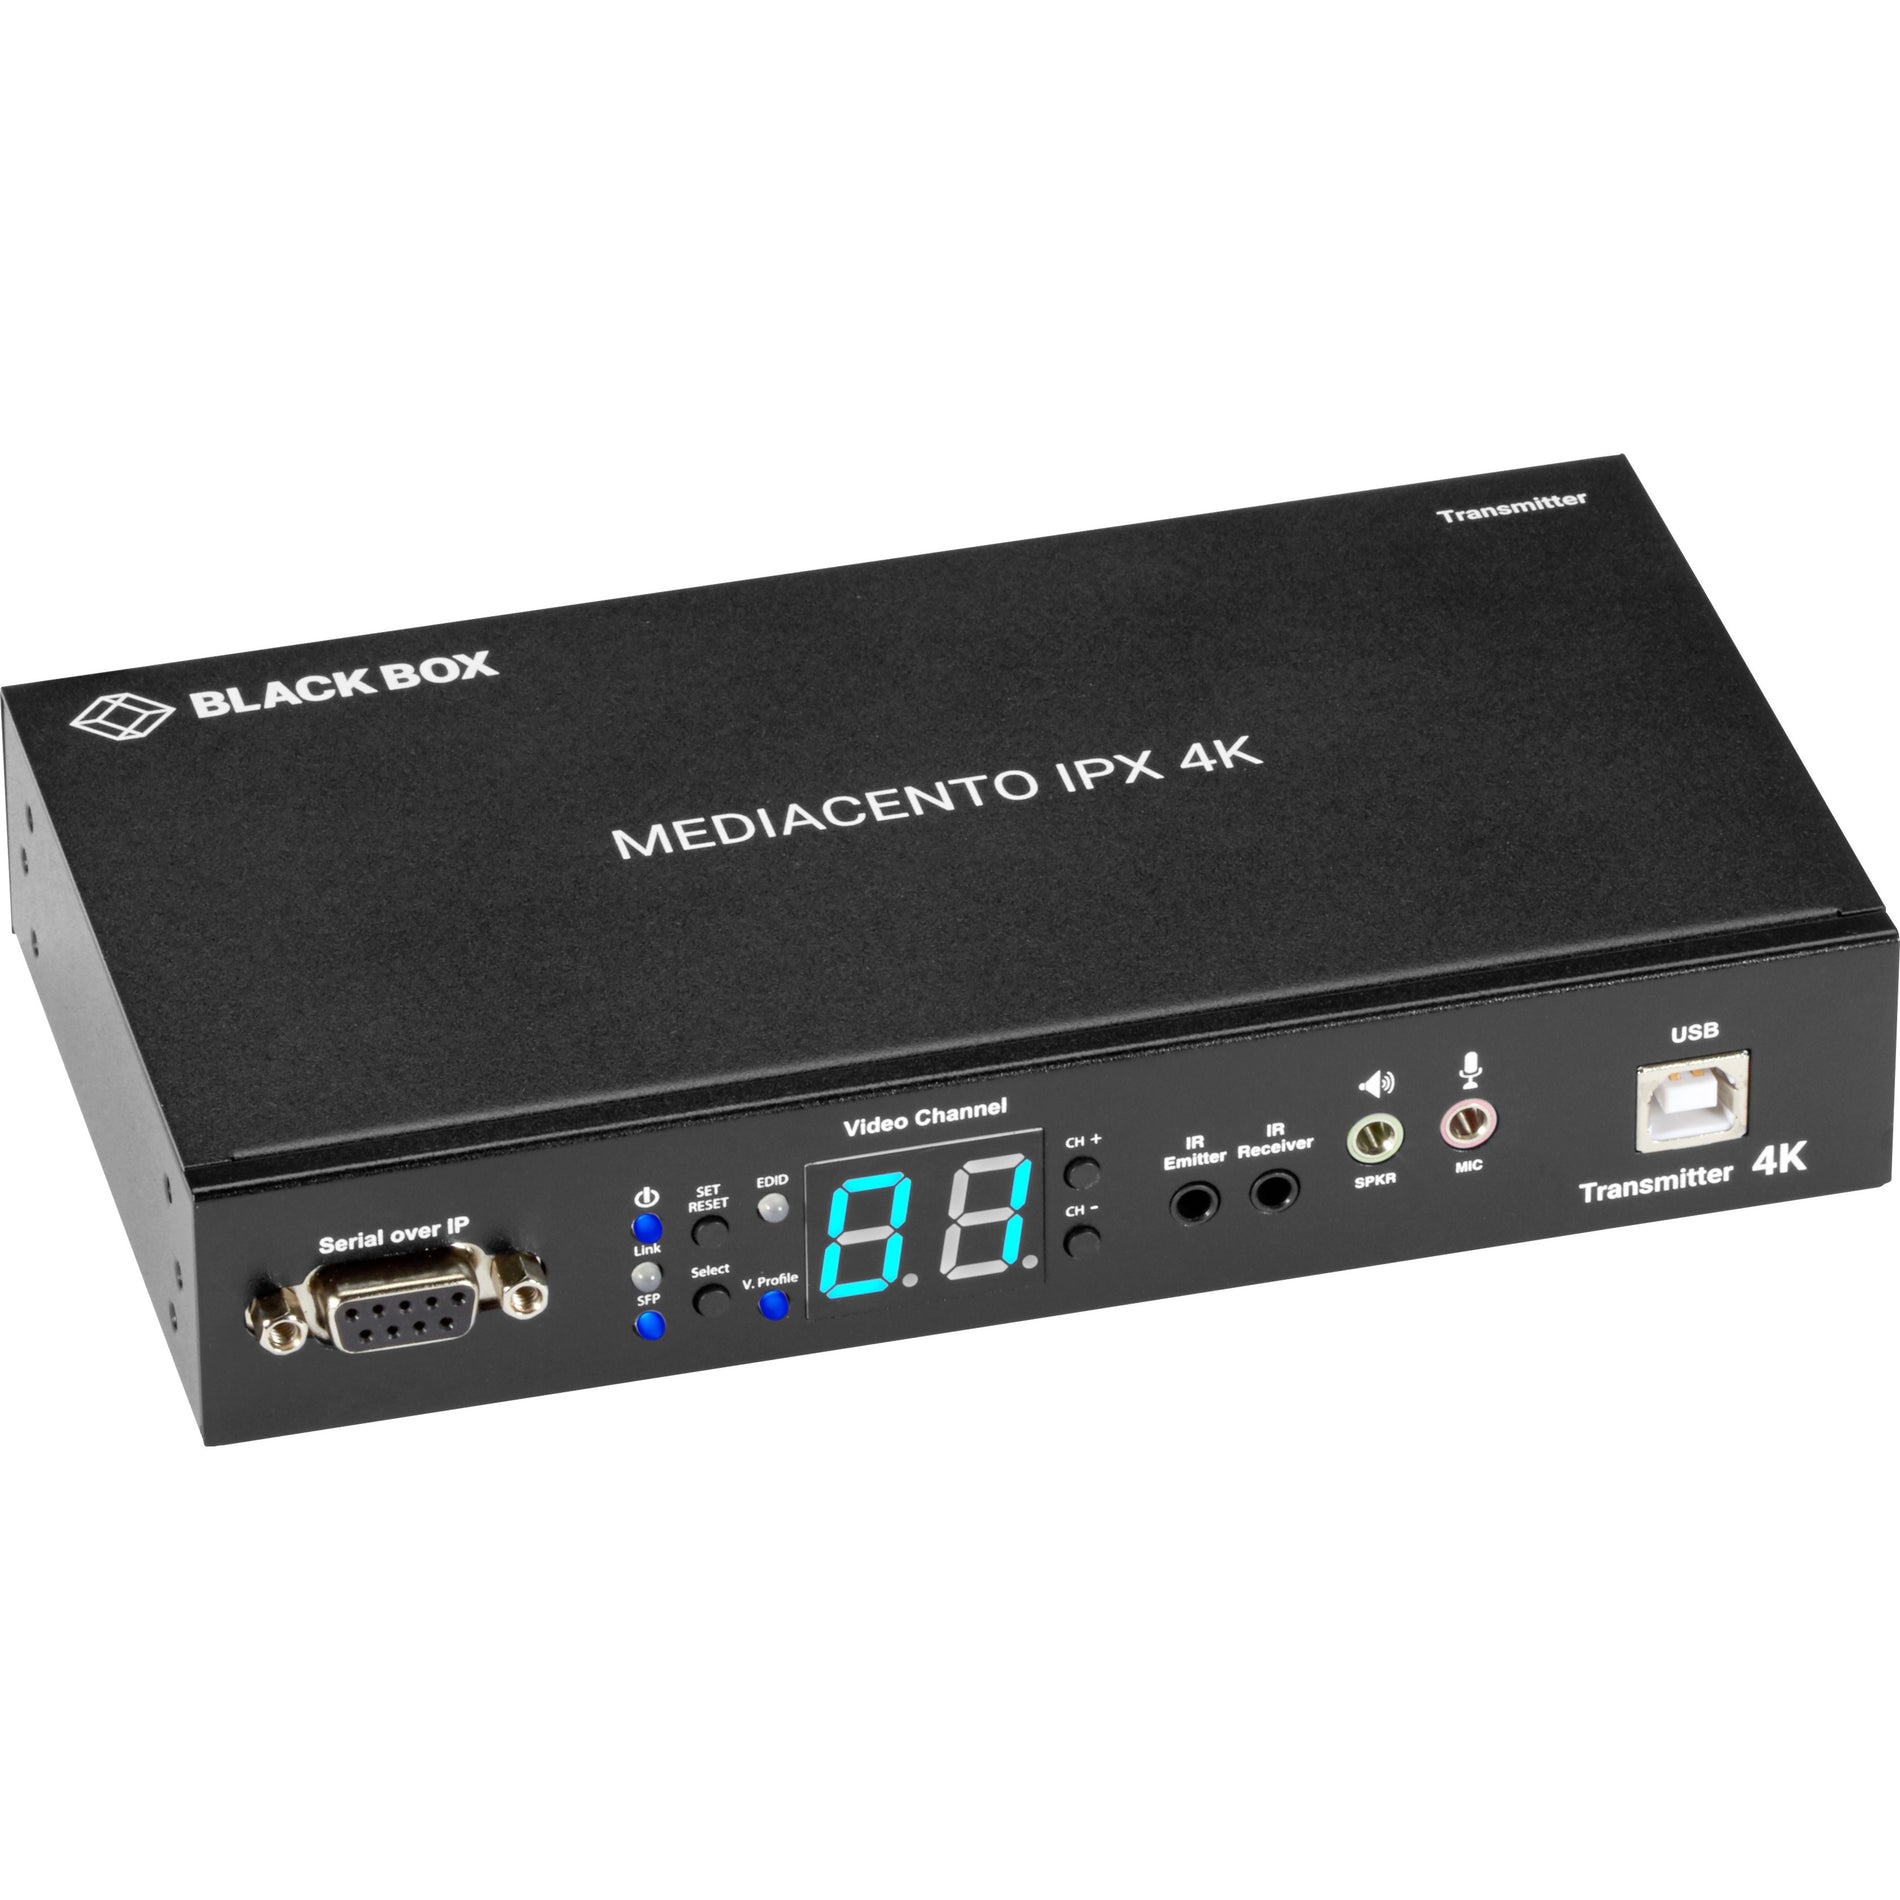 Black Box VX-HDMI-4KIP-TX MediaCento IPX 4K Transmitter - HDMI, USB, Serial, IR, Audio, 4K Video, 3 Year Warranty